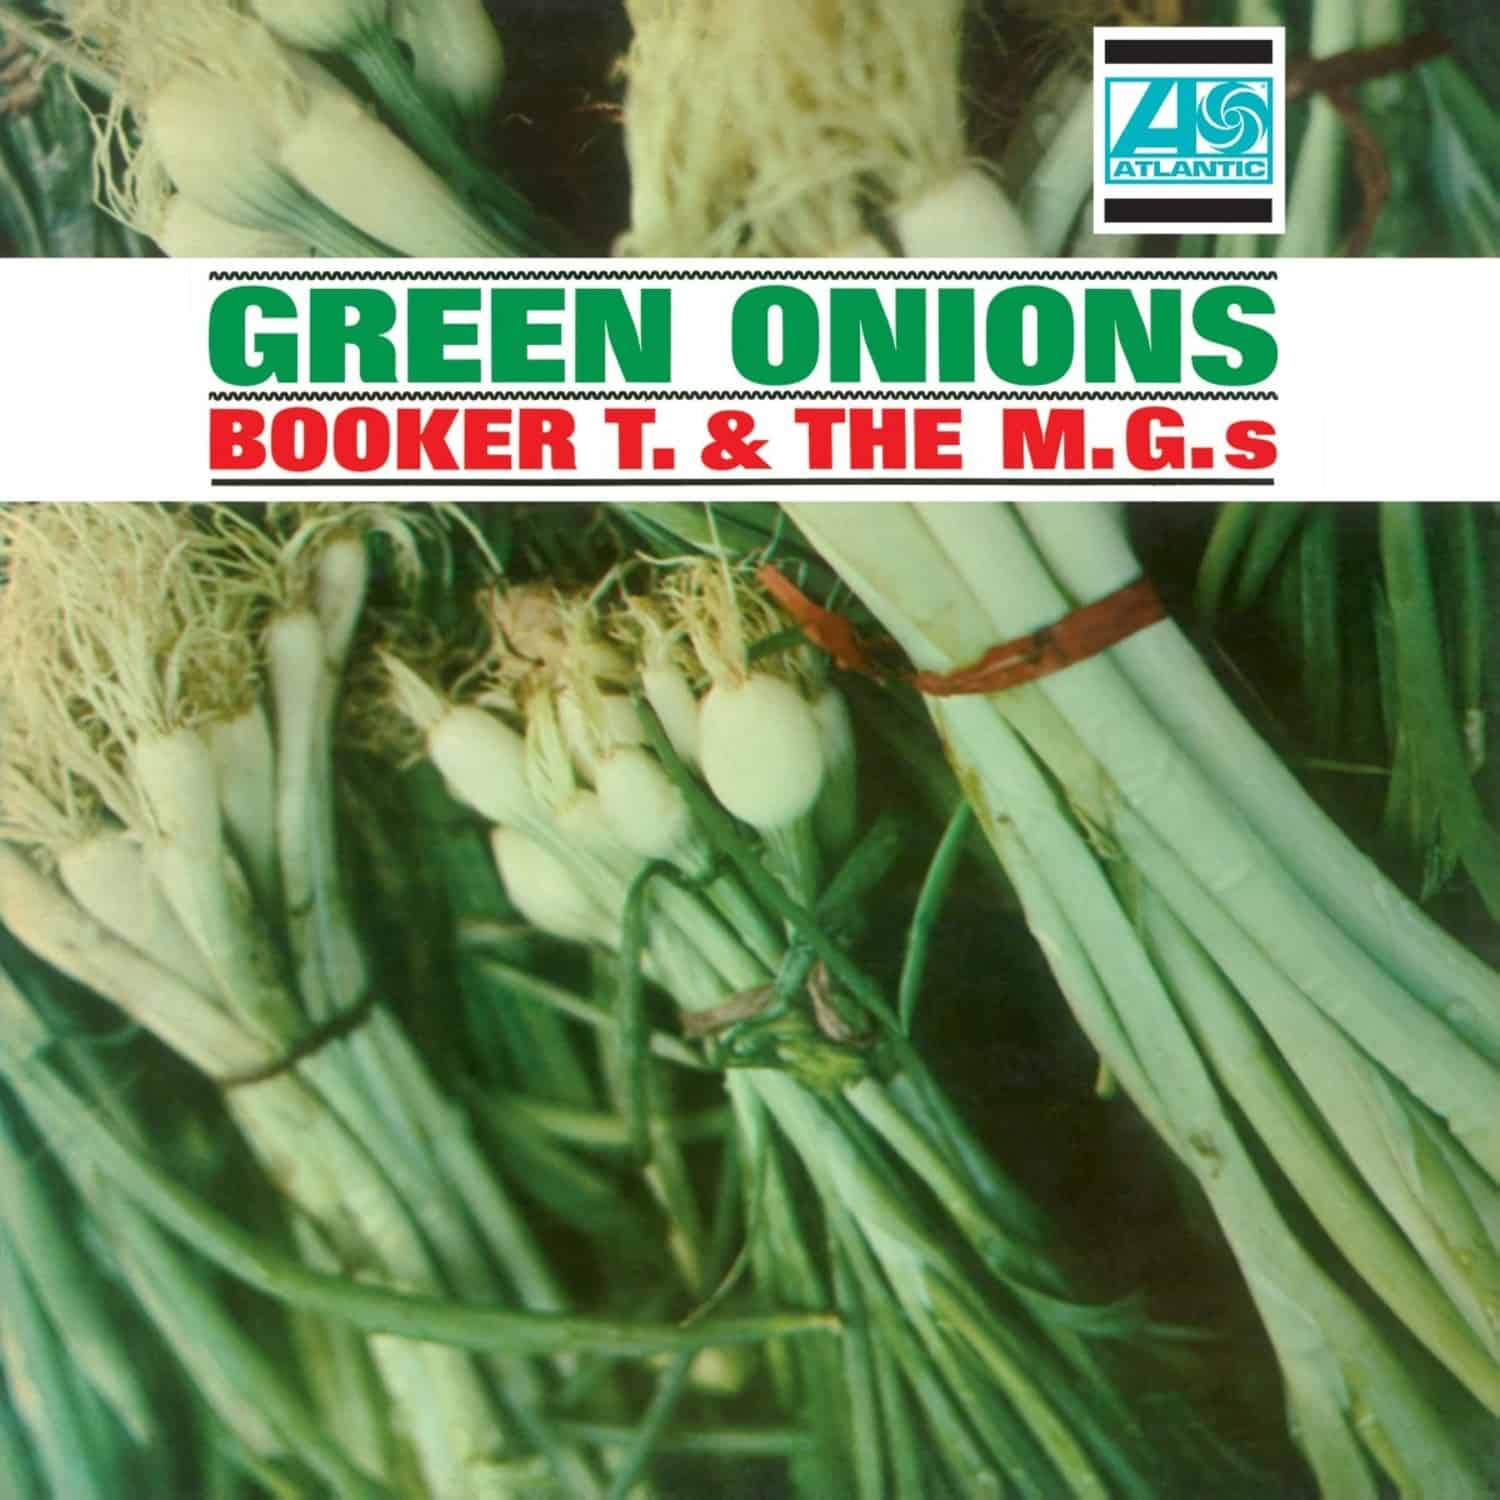 Booker T & MG s - GREEN ONIONS 